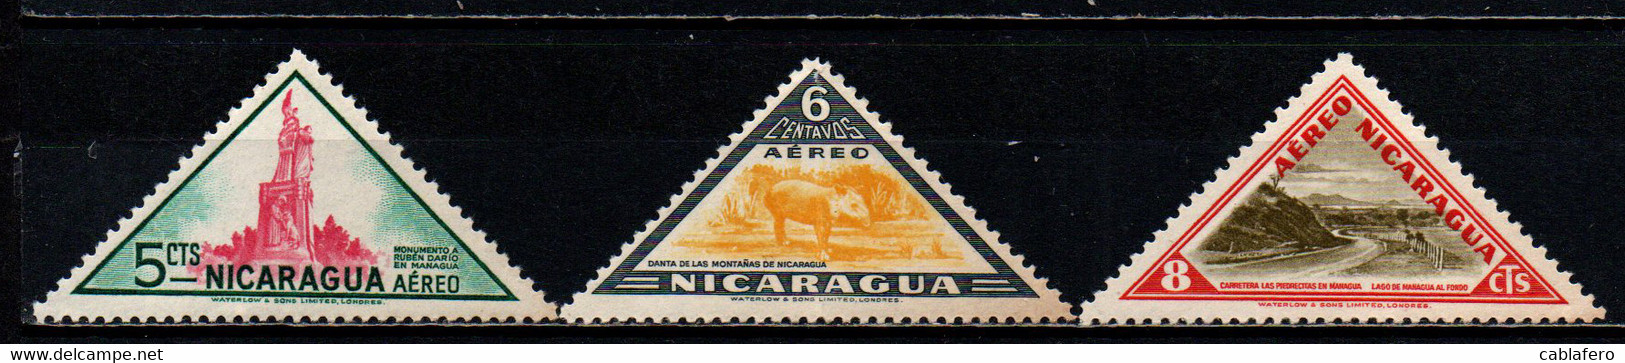 NICARAGUA - 1947 - Ruben Daio Monument, Tapir, Stone Highway - MNH - Nicaragua